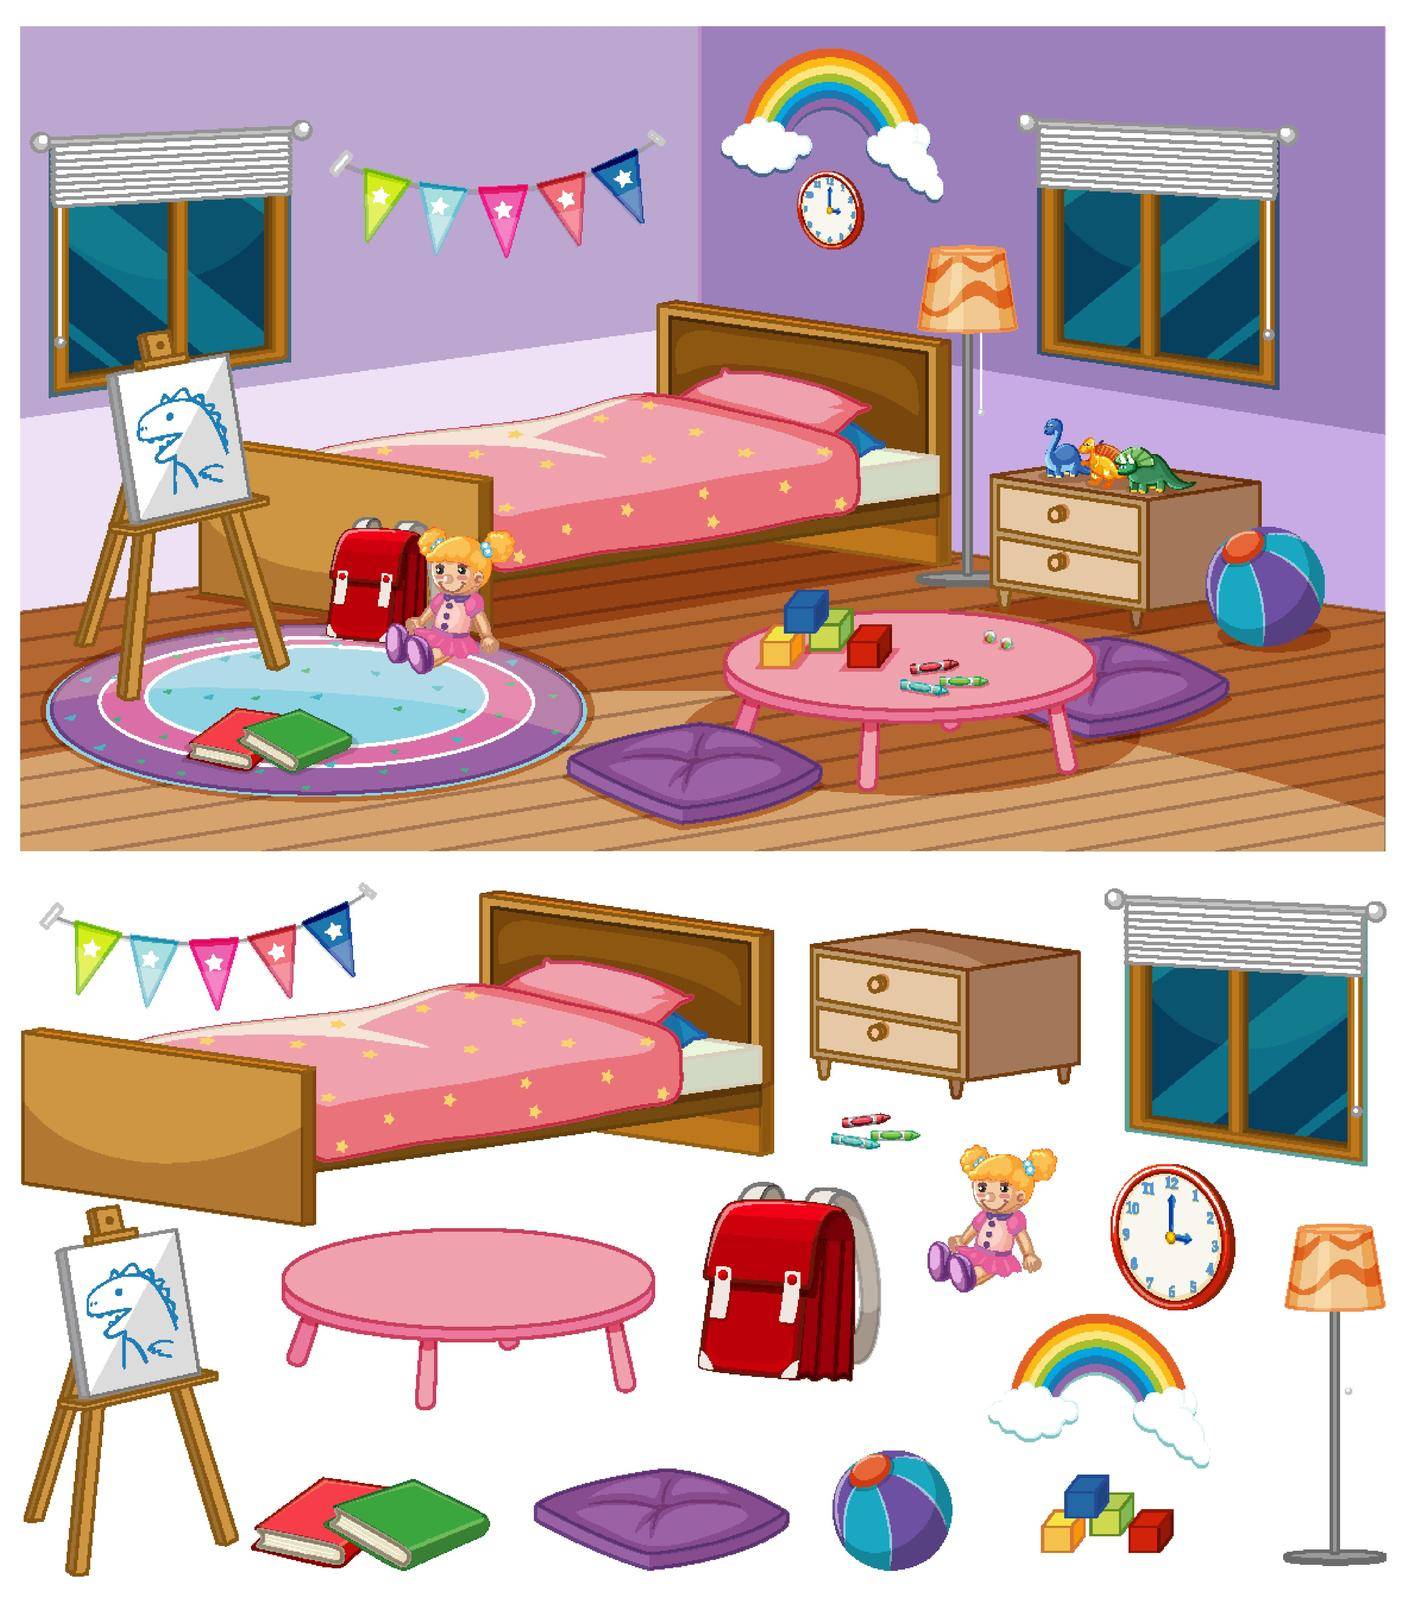 Background scene of bedroom with many furnitures illustration